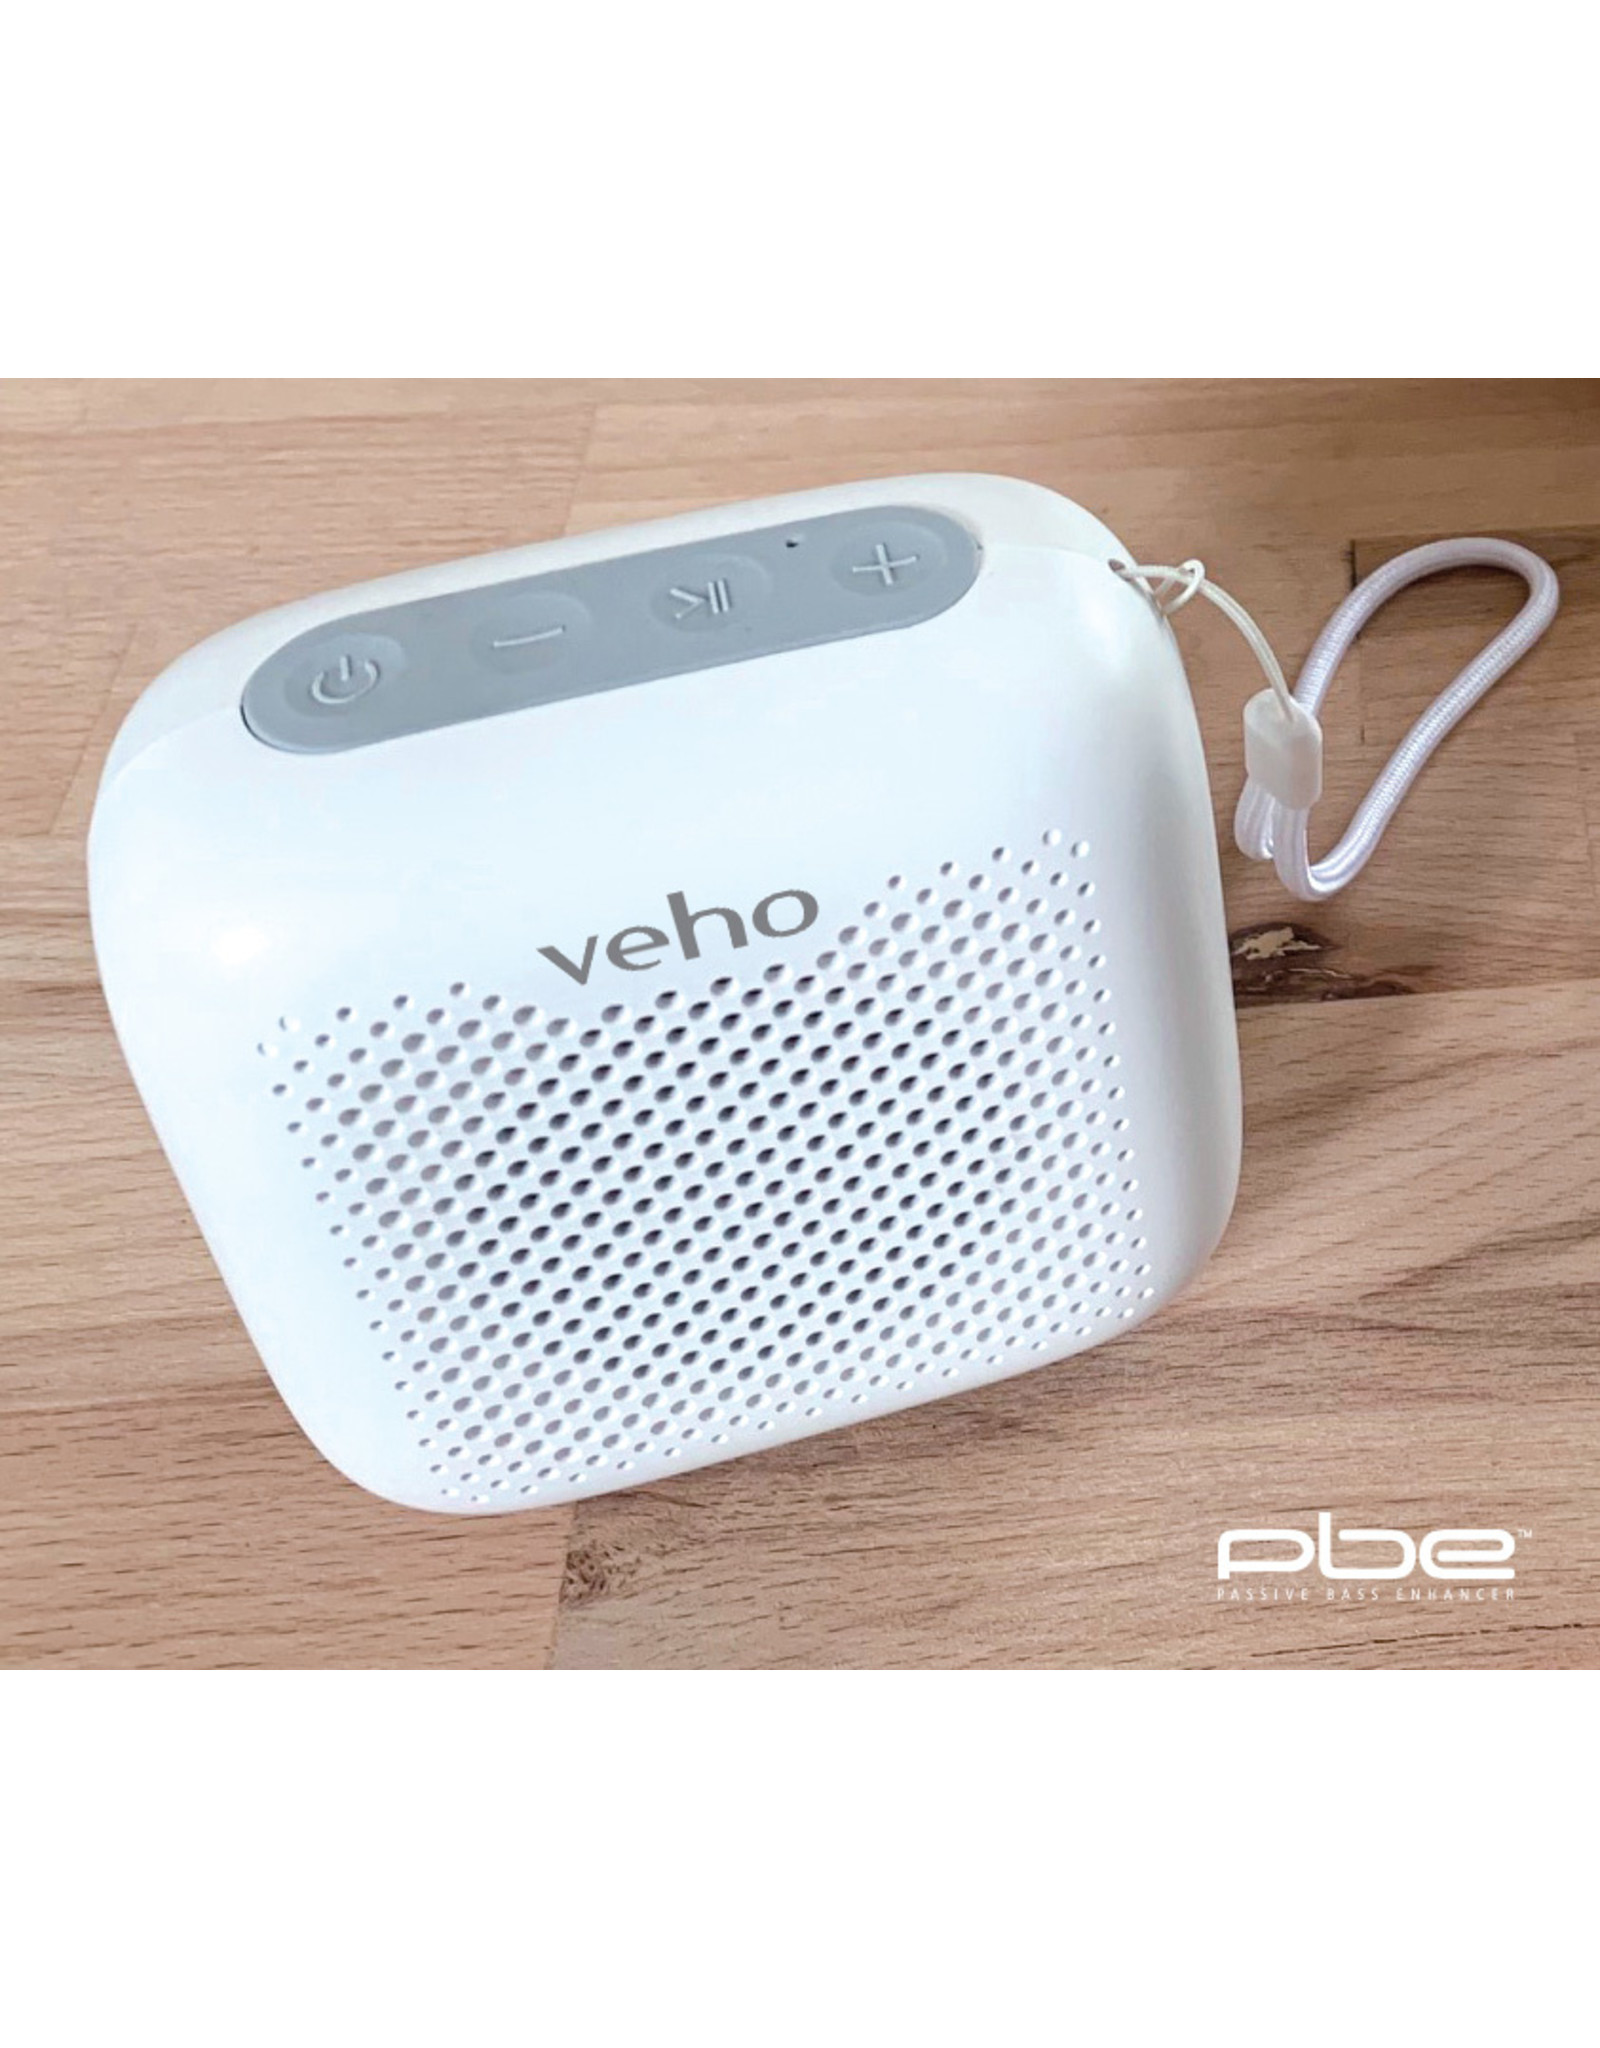 Veho Veho MZ-4 Portable Bluetooth Wireless Speaker